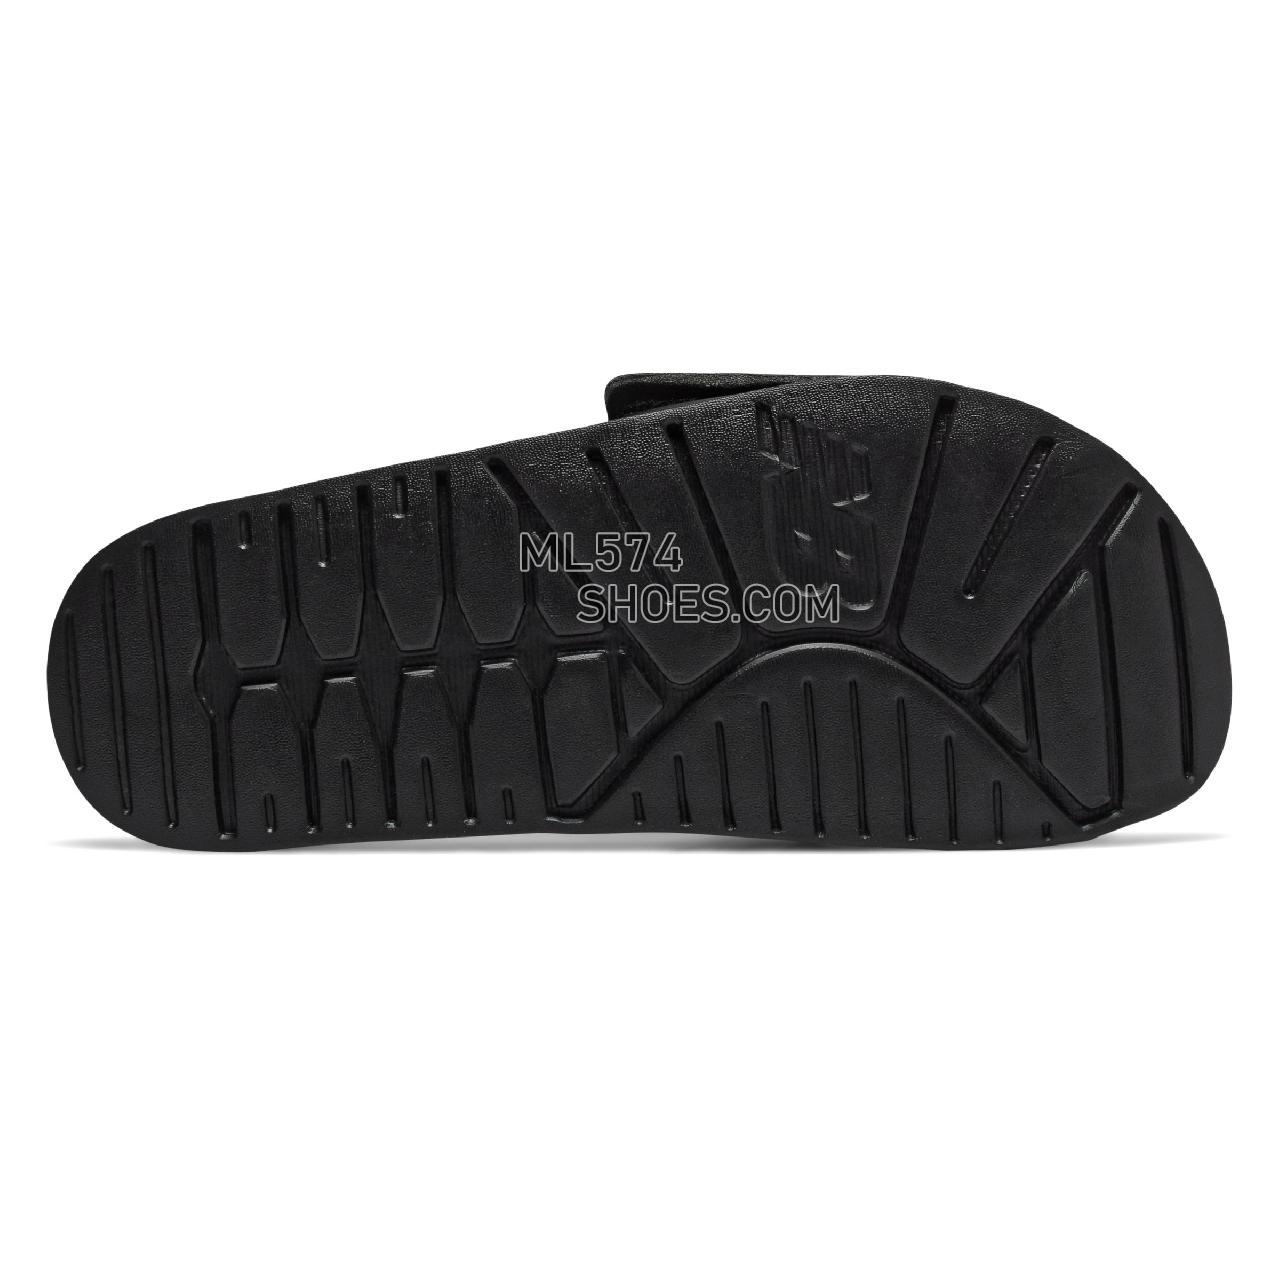 New Balance 200 Adjustable - Women's Flip Flops - Black with White - SWA200B1